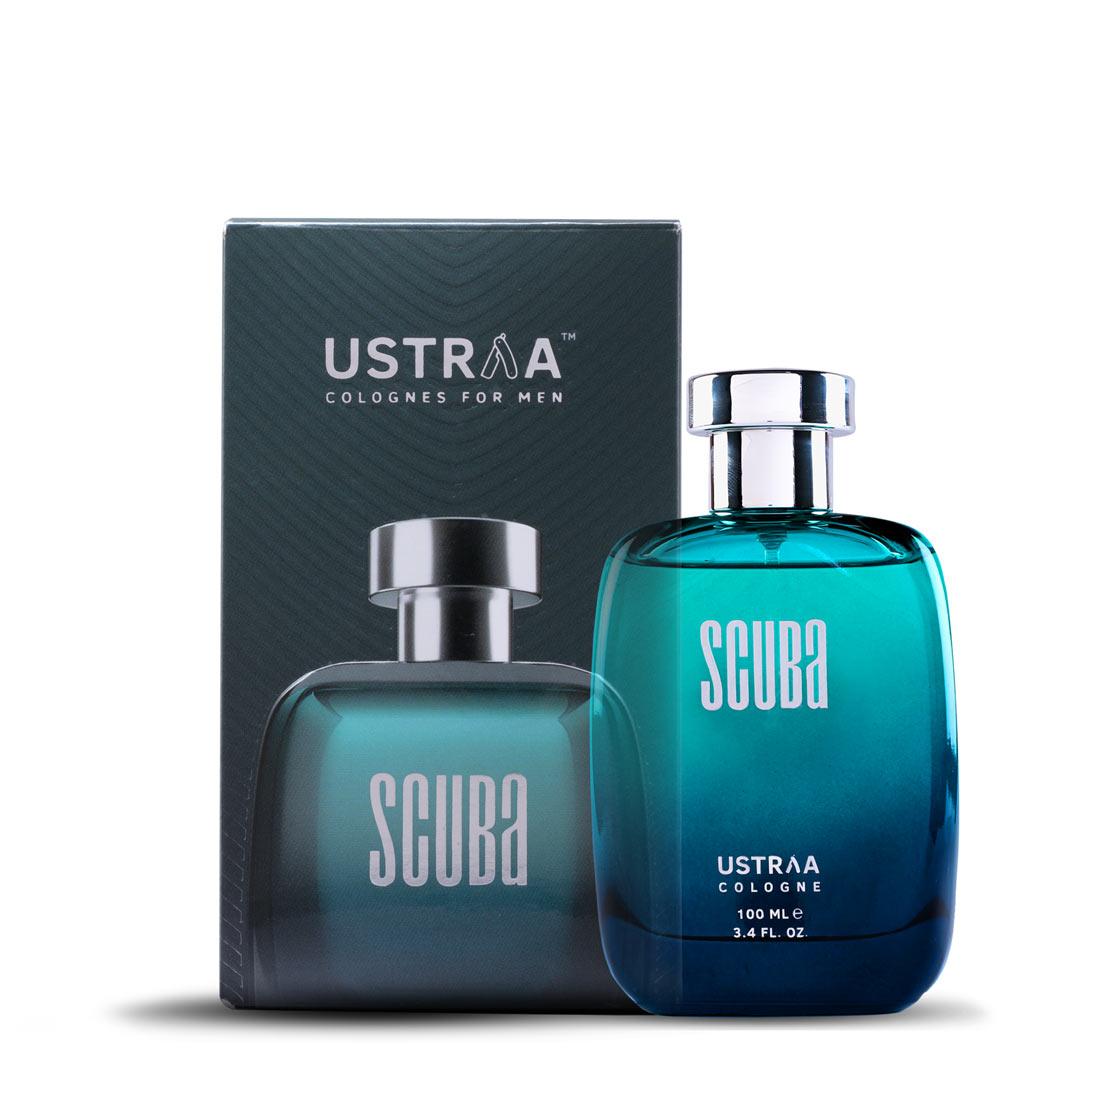 Scuba Cologne - 100 ml - Perfume for Men